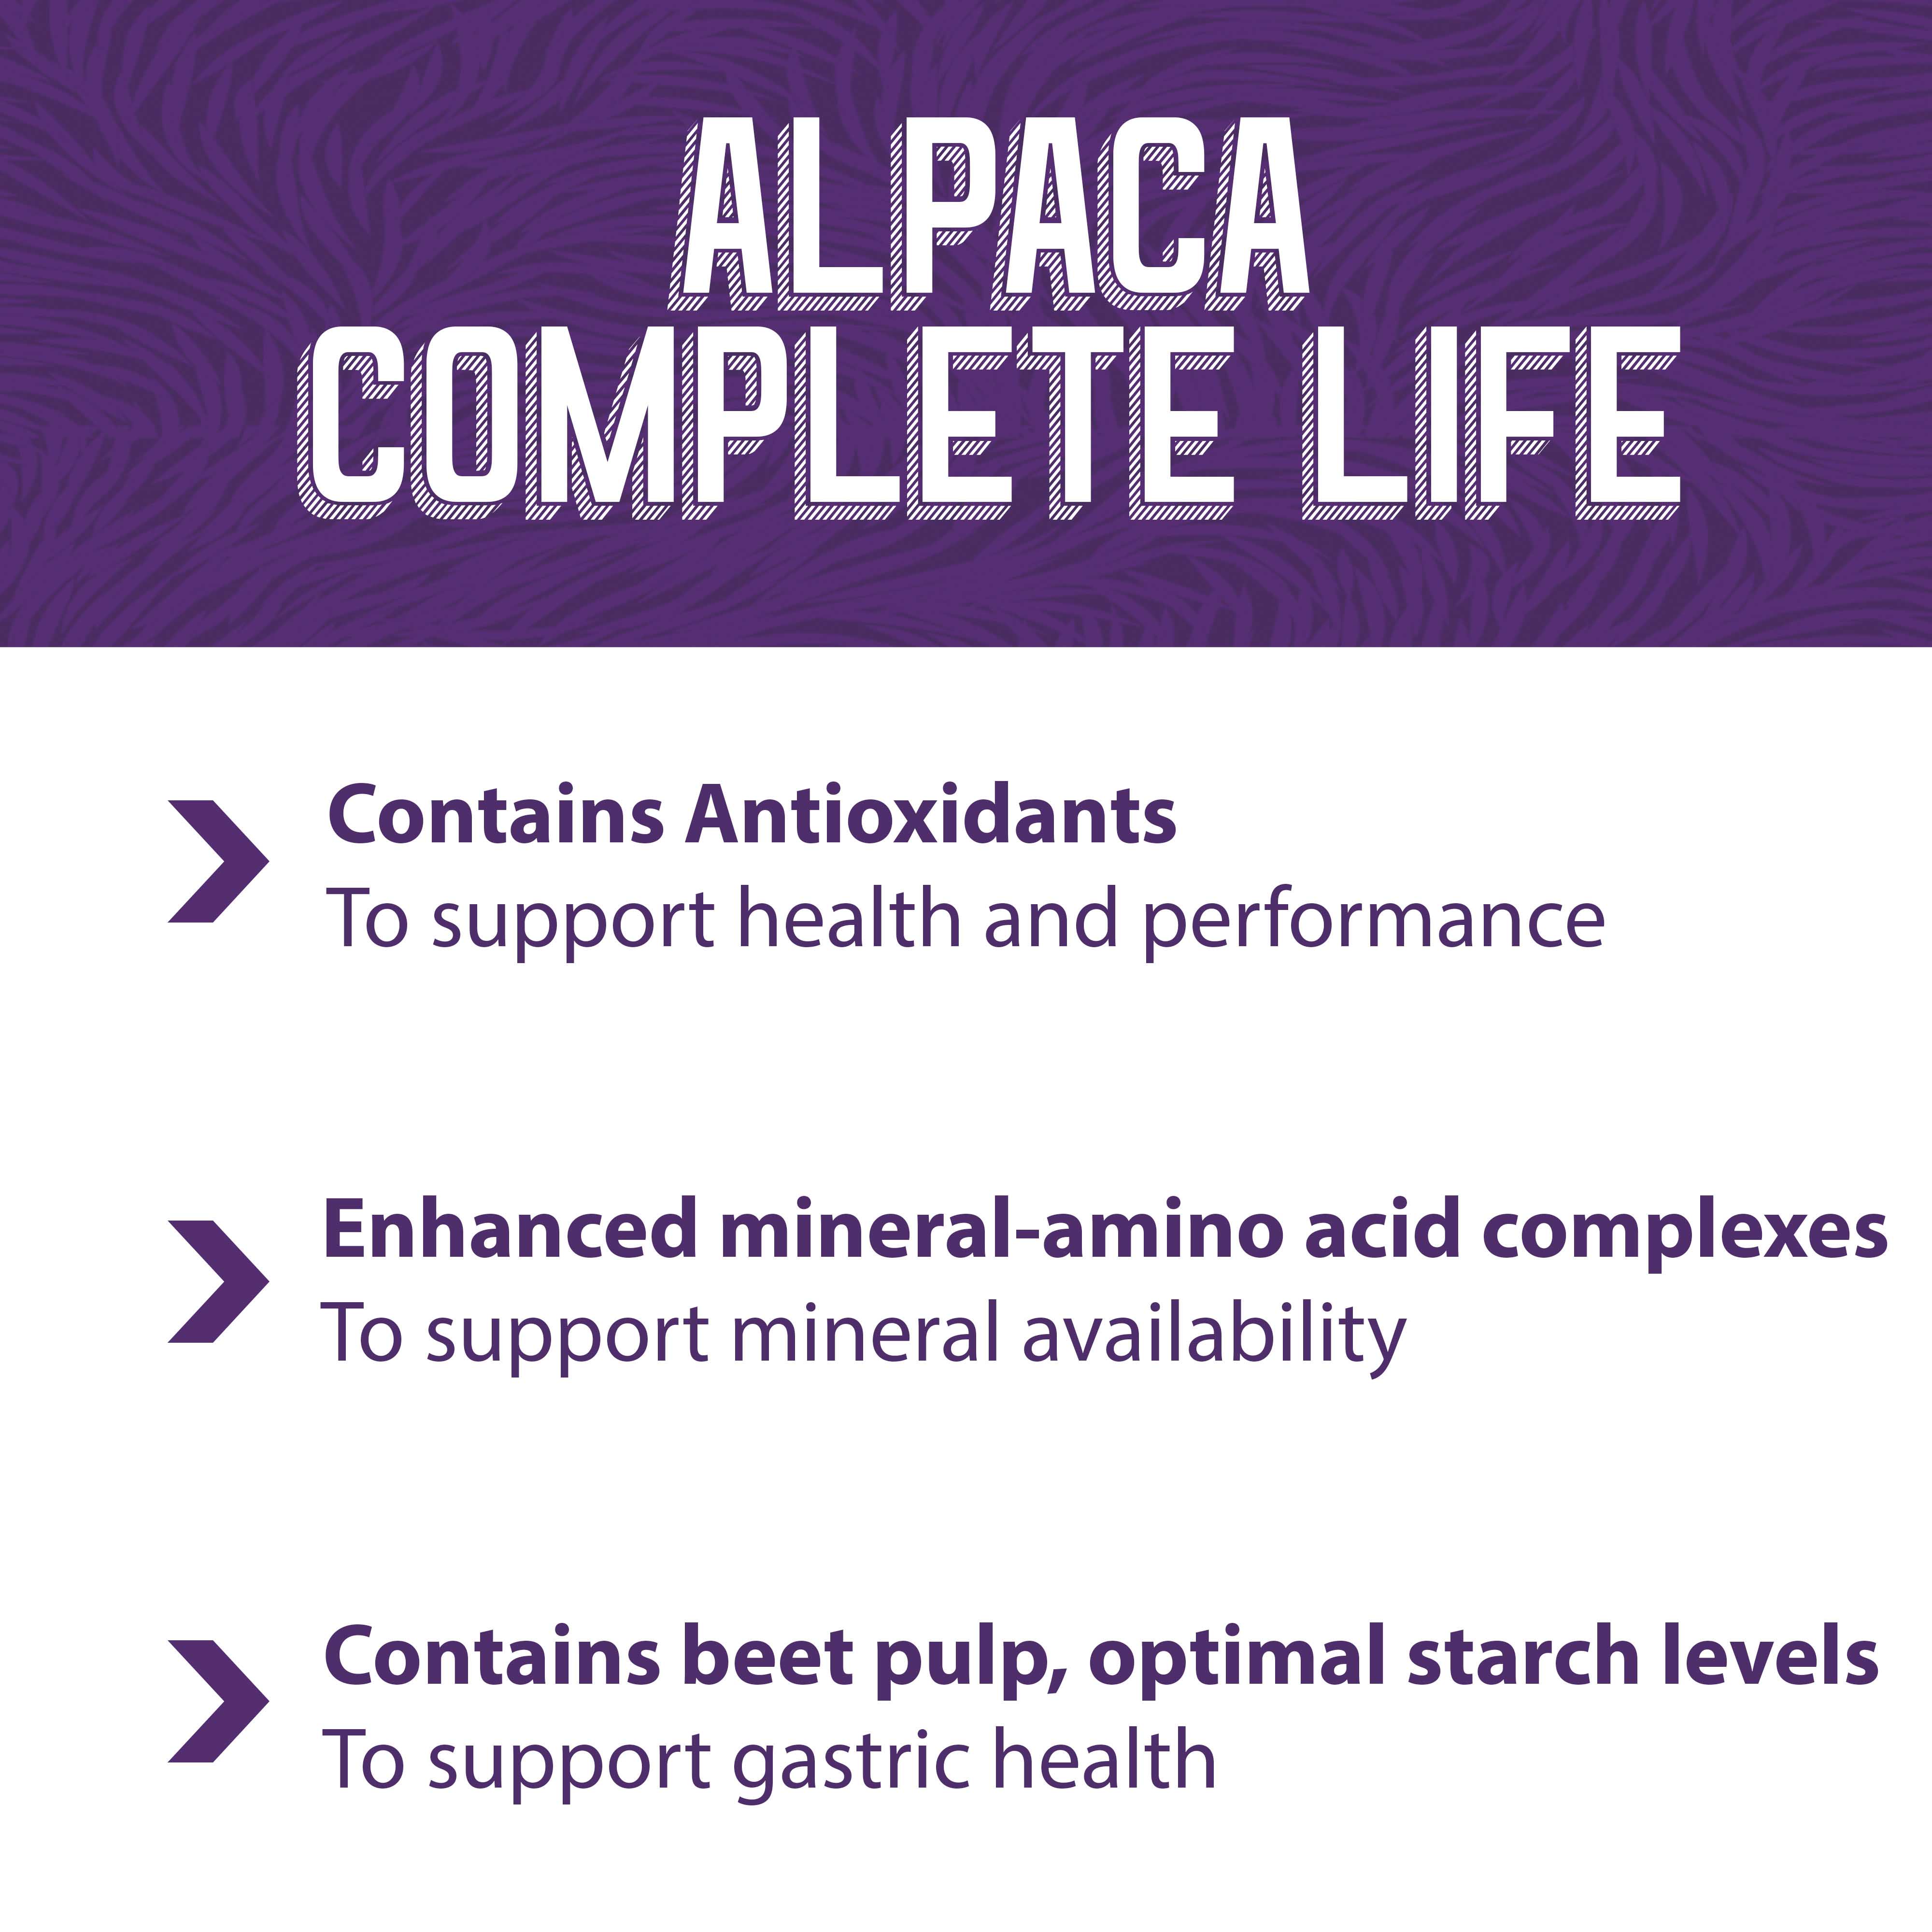 Alpaca complete life contains antioxidants